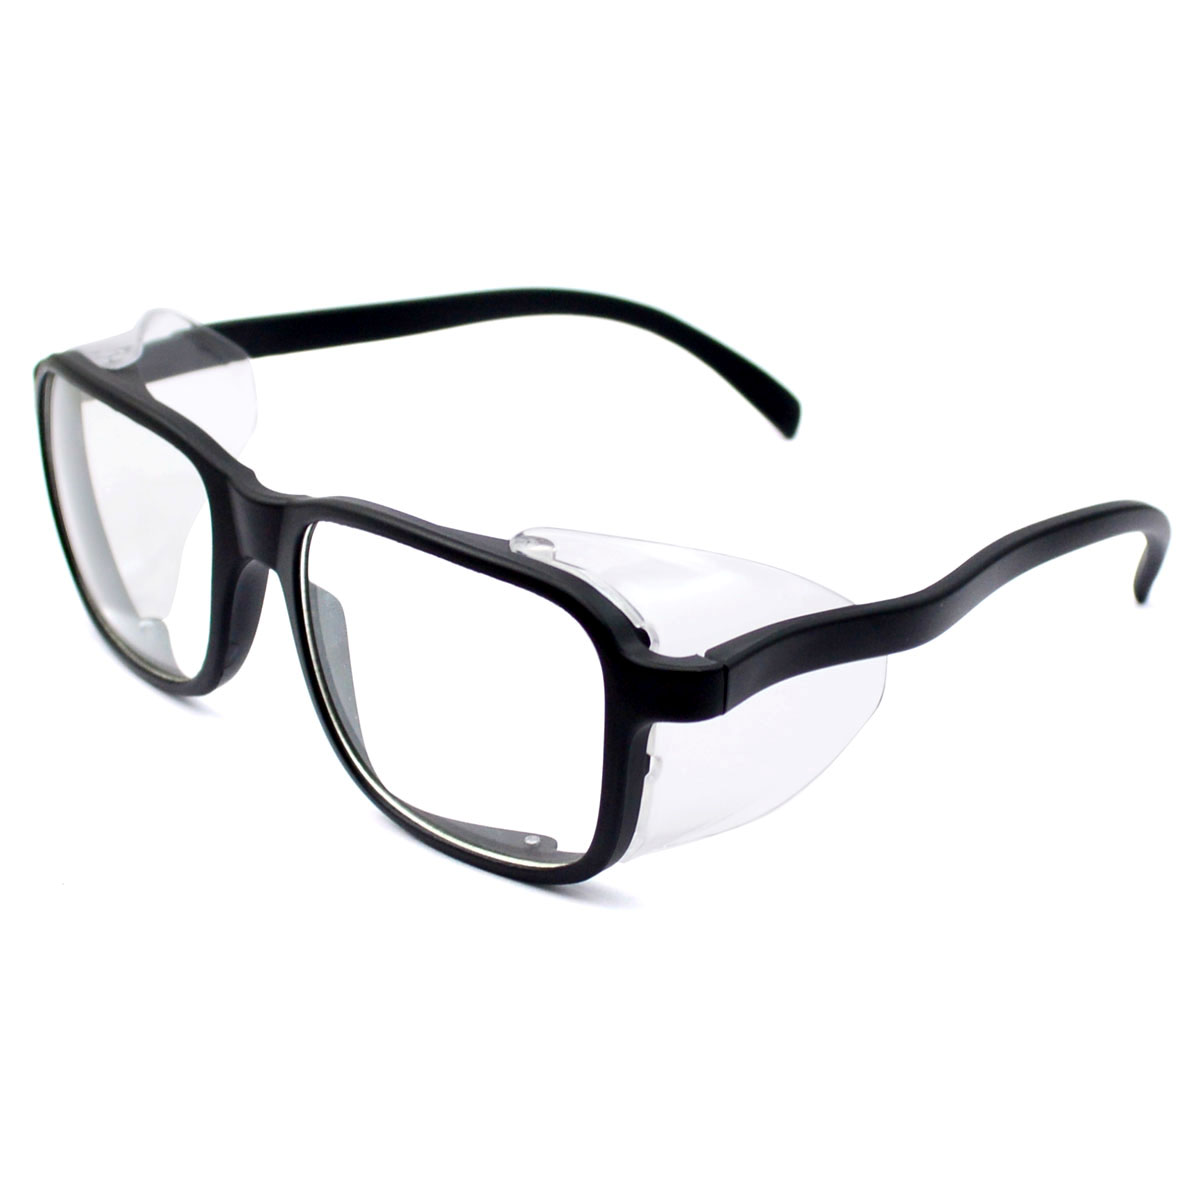 Stylish Eye Protection Safety Optical Glasses with Side Shields